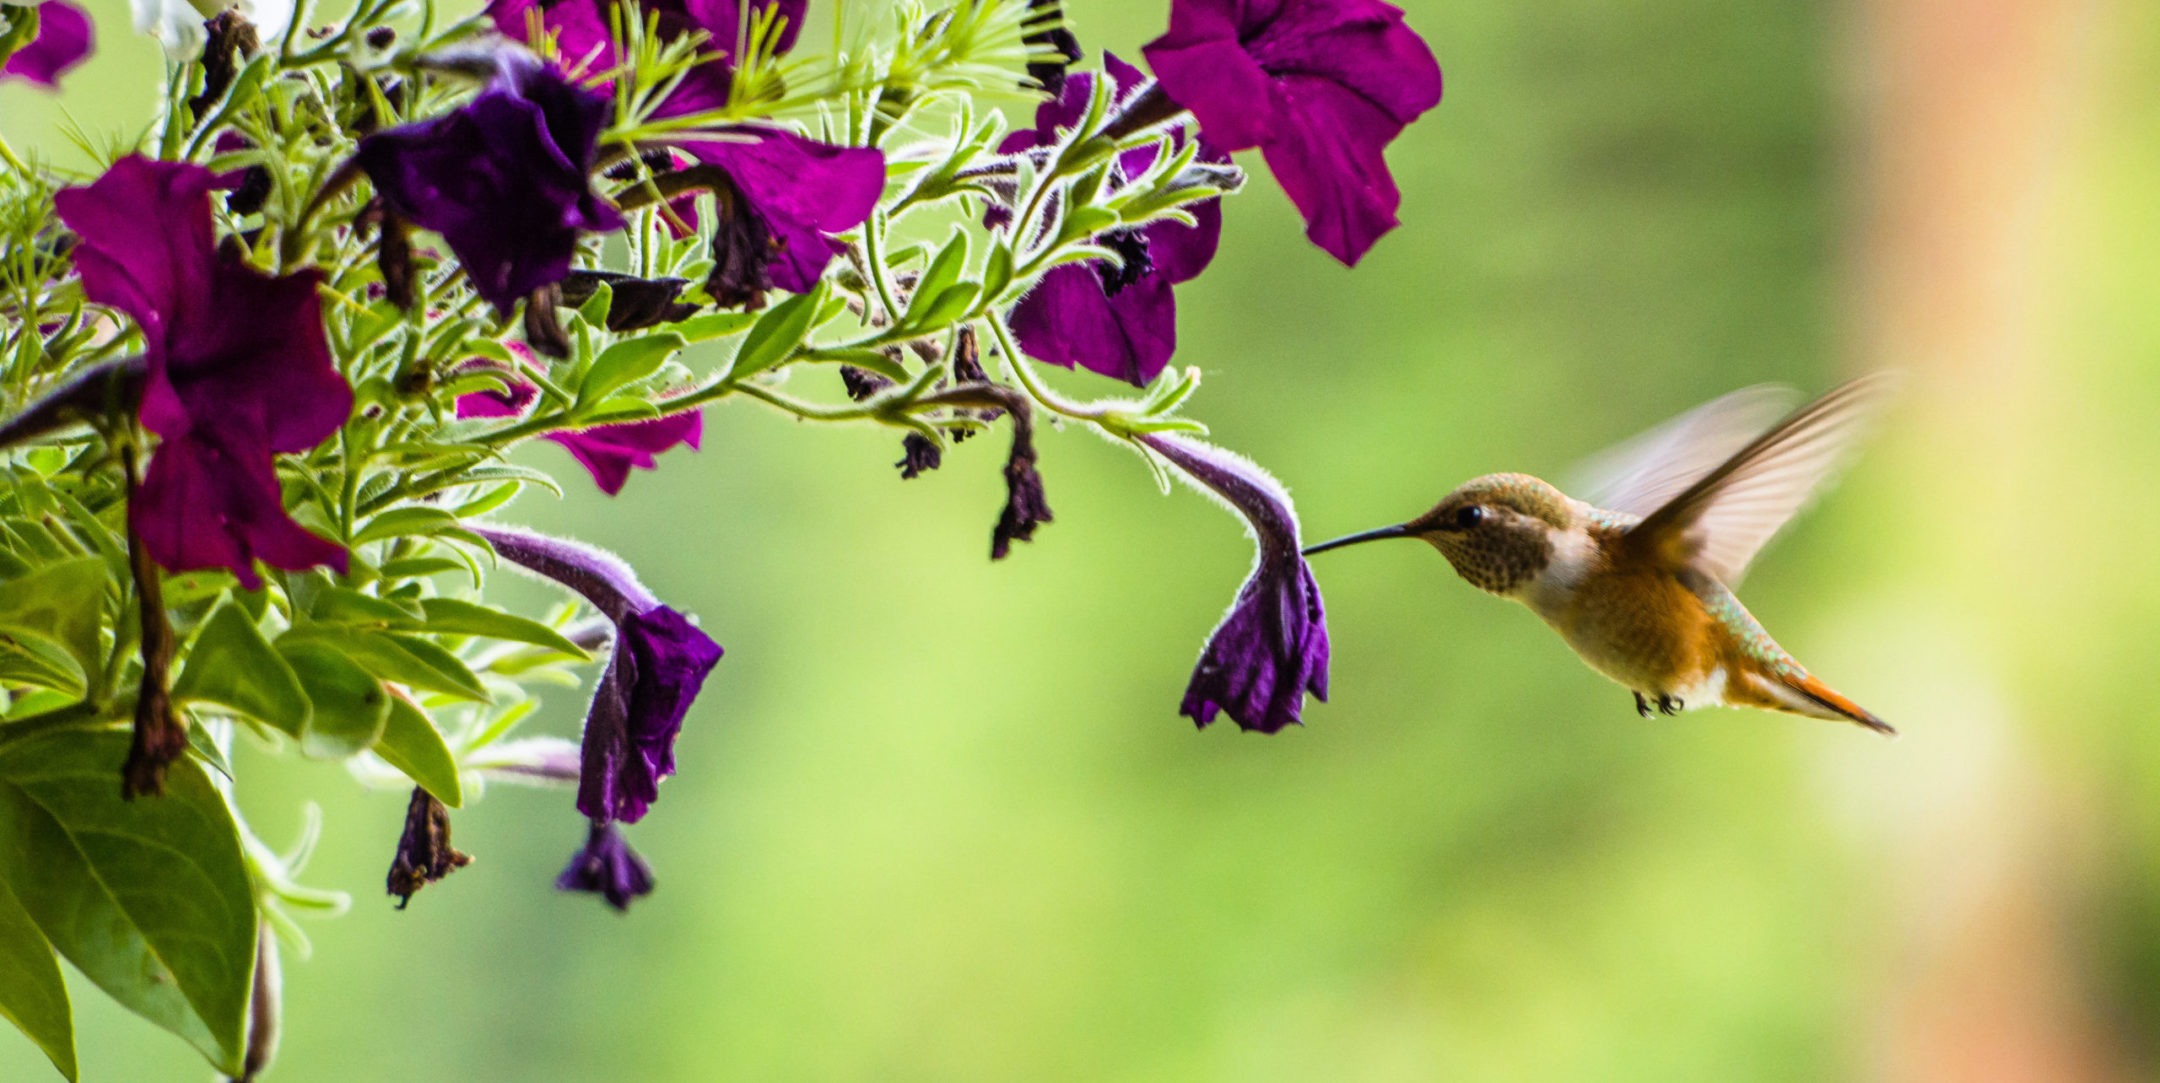 Hummingbird feeding on a flower